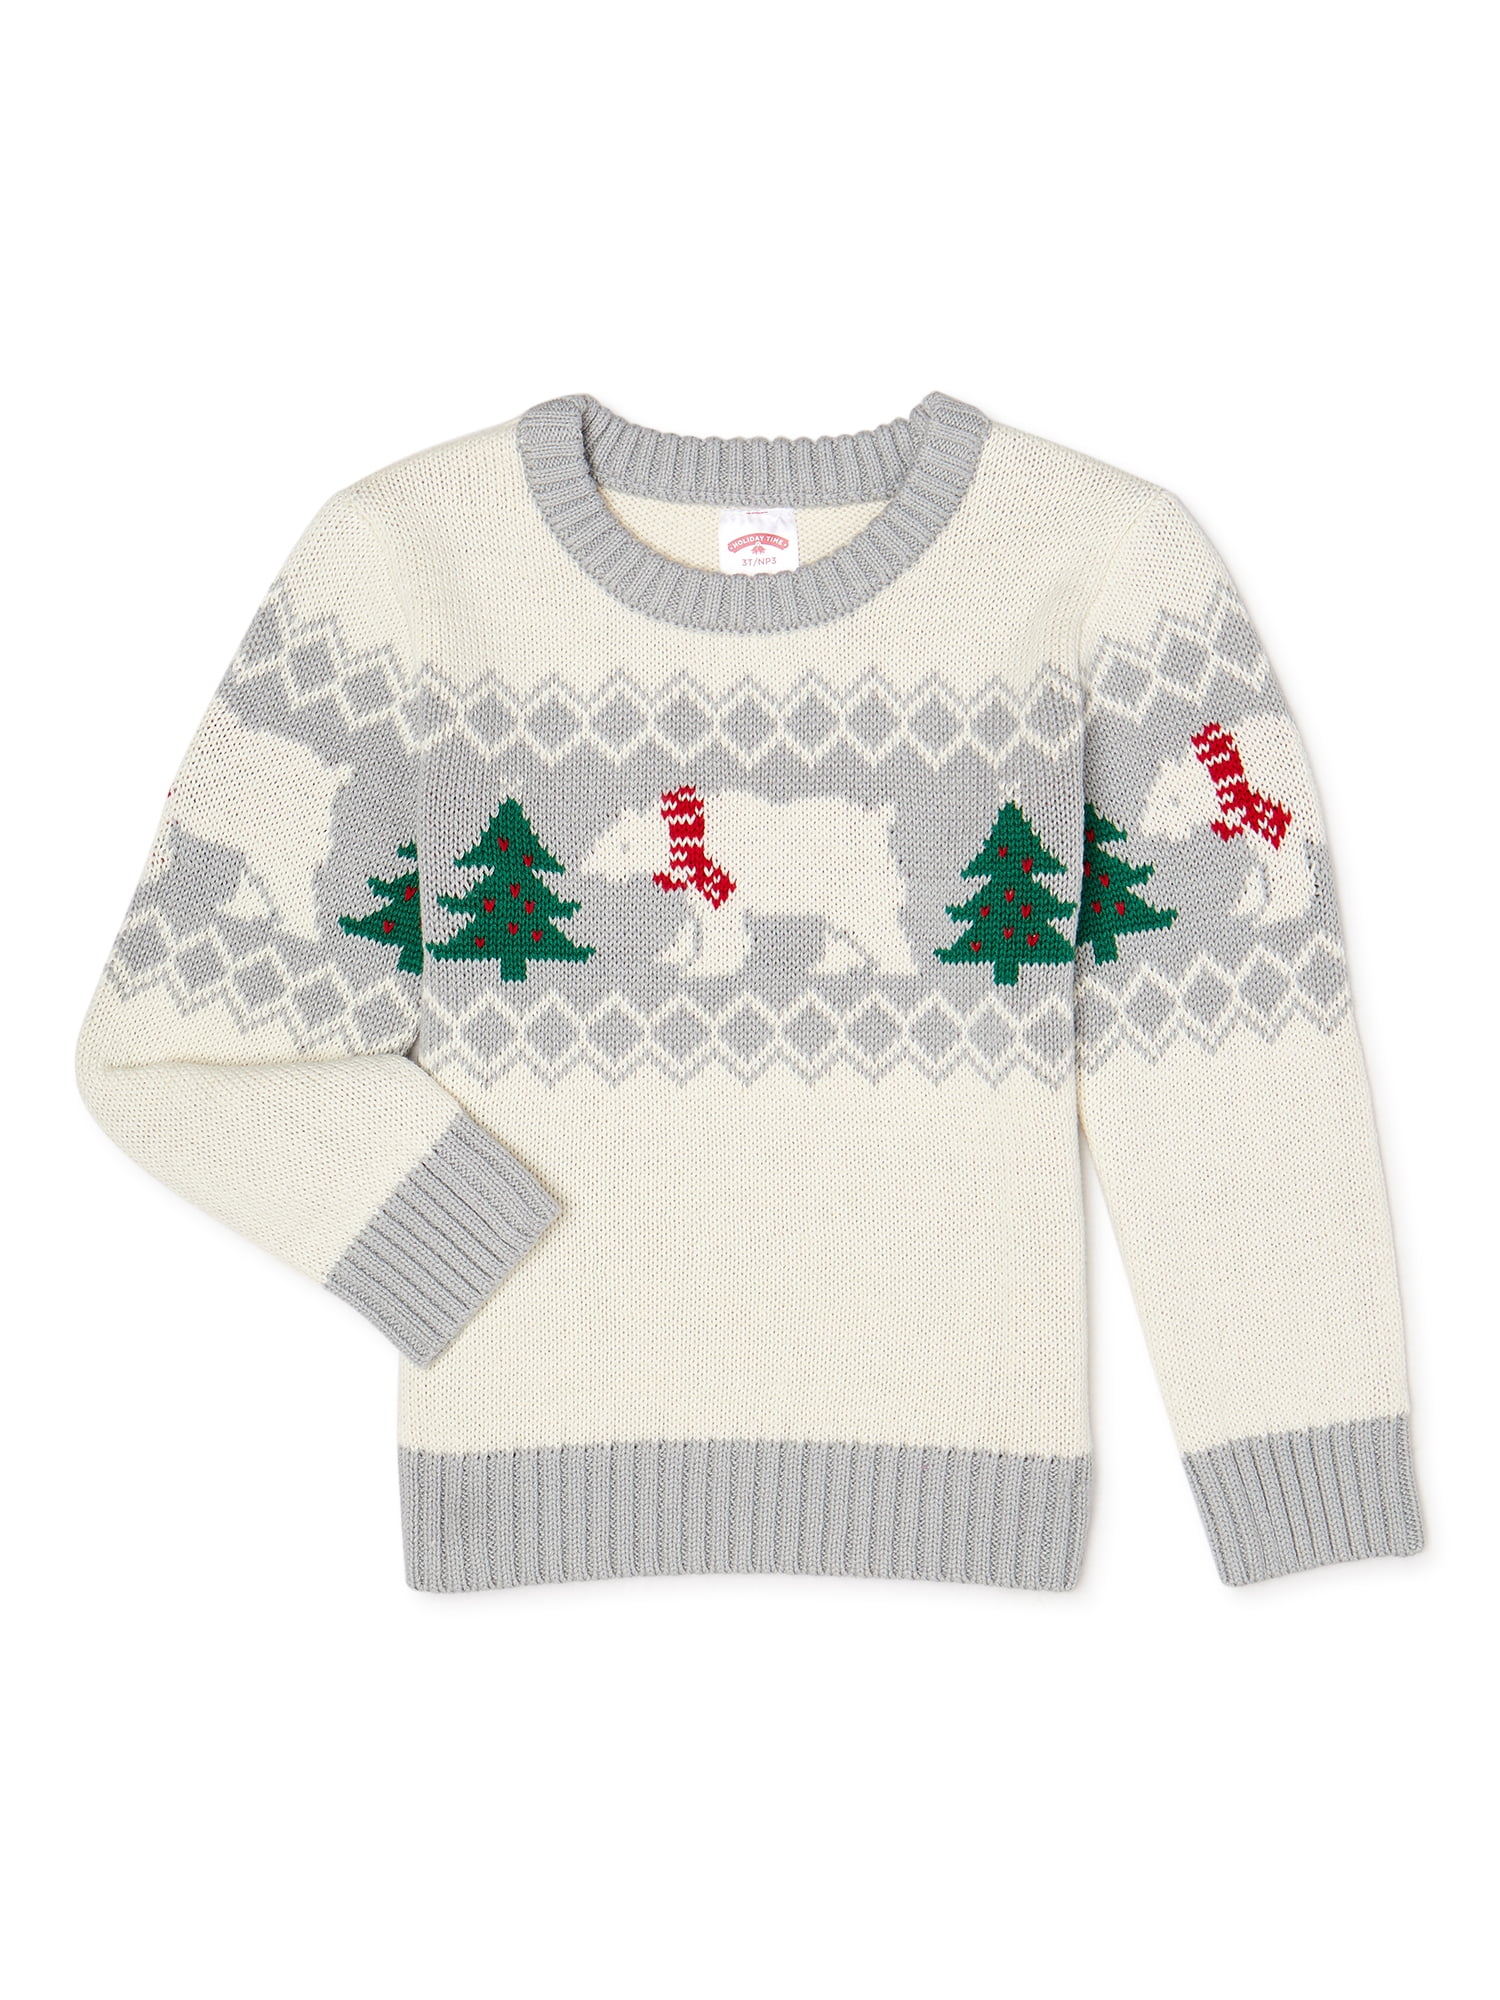 Seasons Greetings Mens Christmas/Xmas Knitted Jumpers